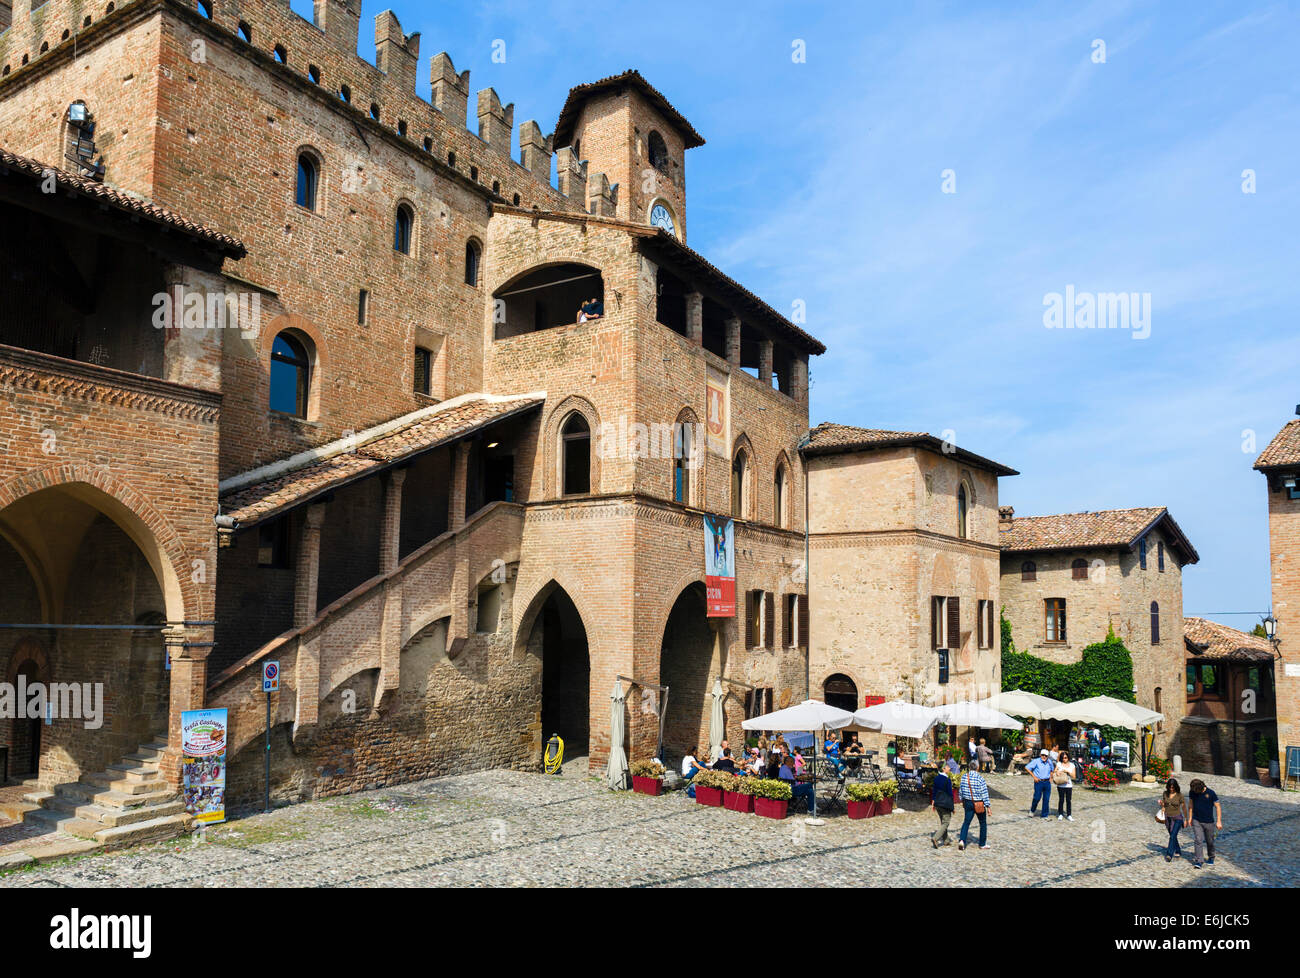 The Palazzo del Podesta in the main square of the medieval town of Castell'Arquato, Piacenza, Emilia Romagna, Italy Stock Photo